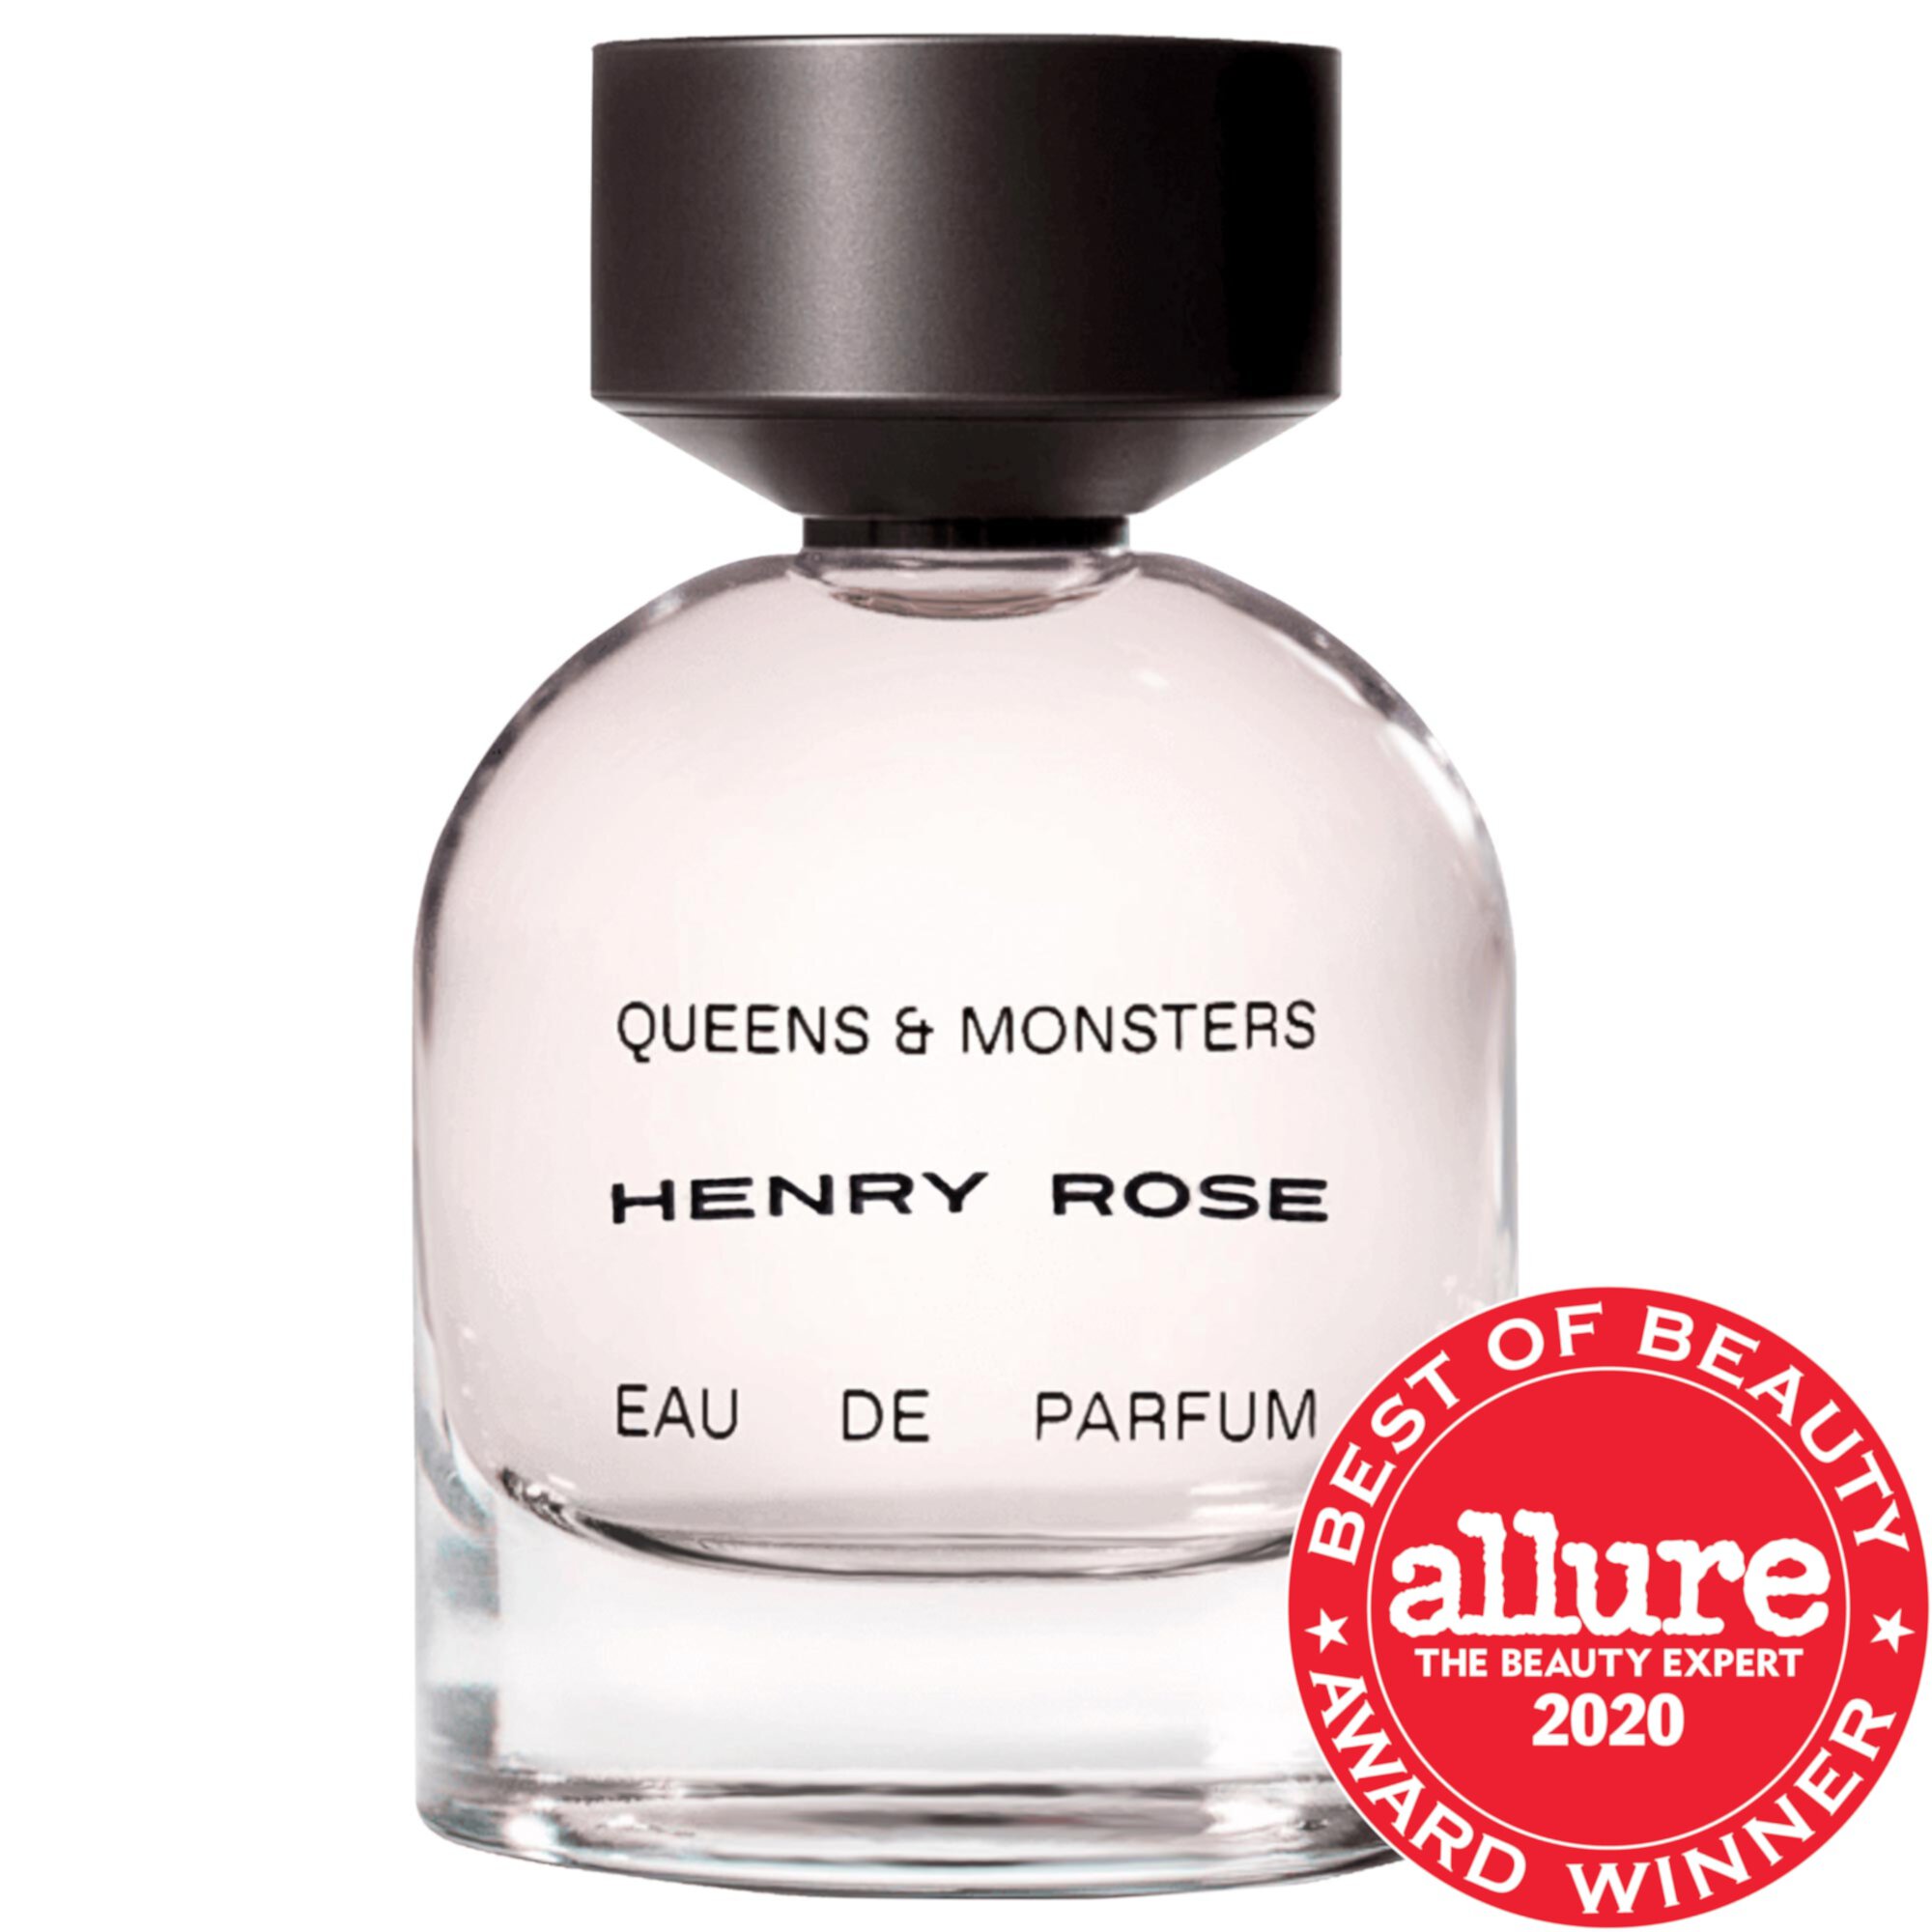 Queens & Monsters Eau de Parfum Henry Rose